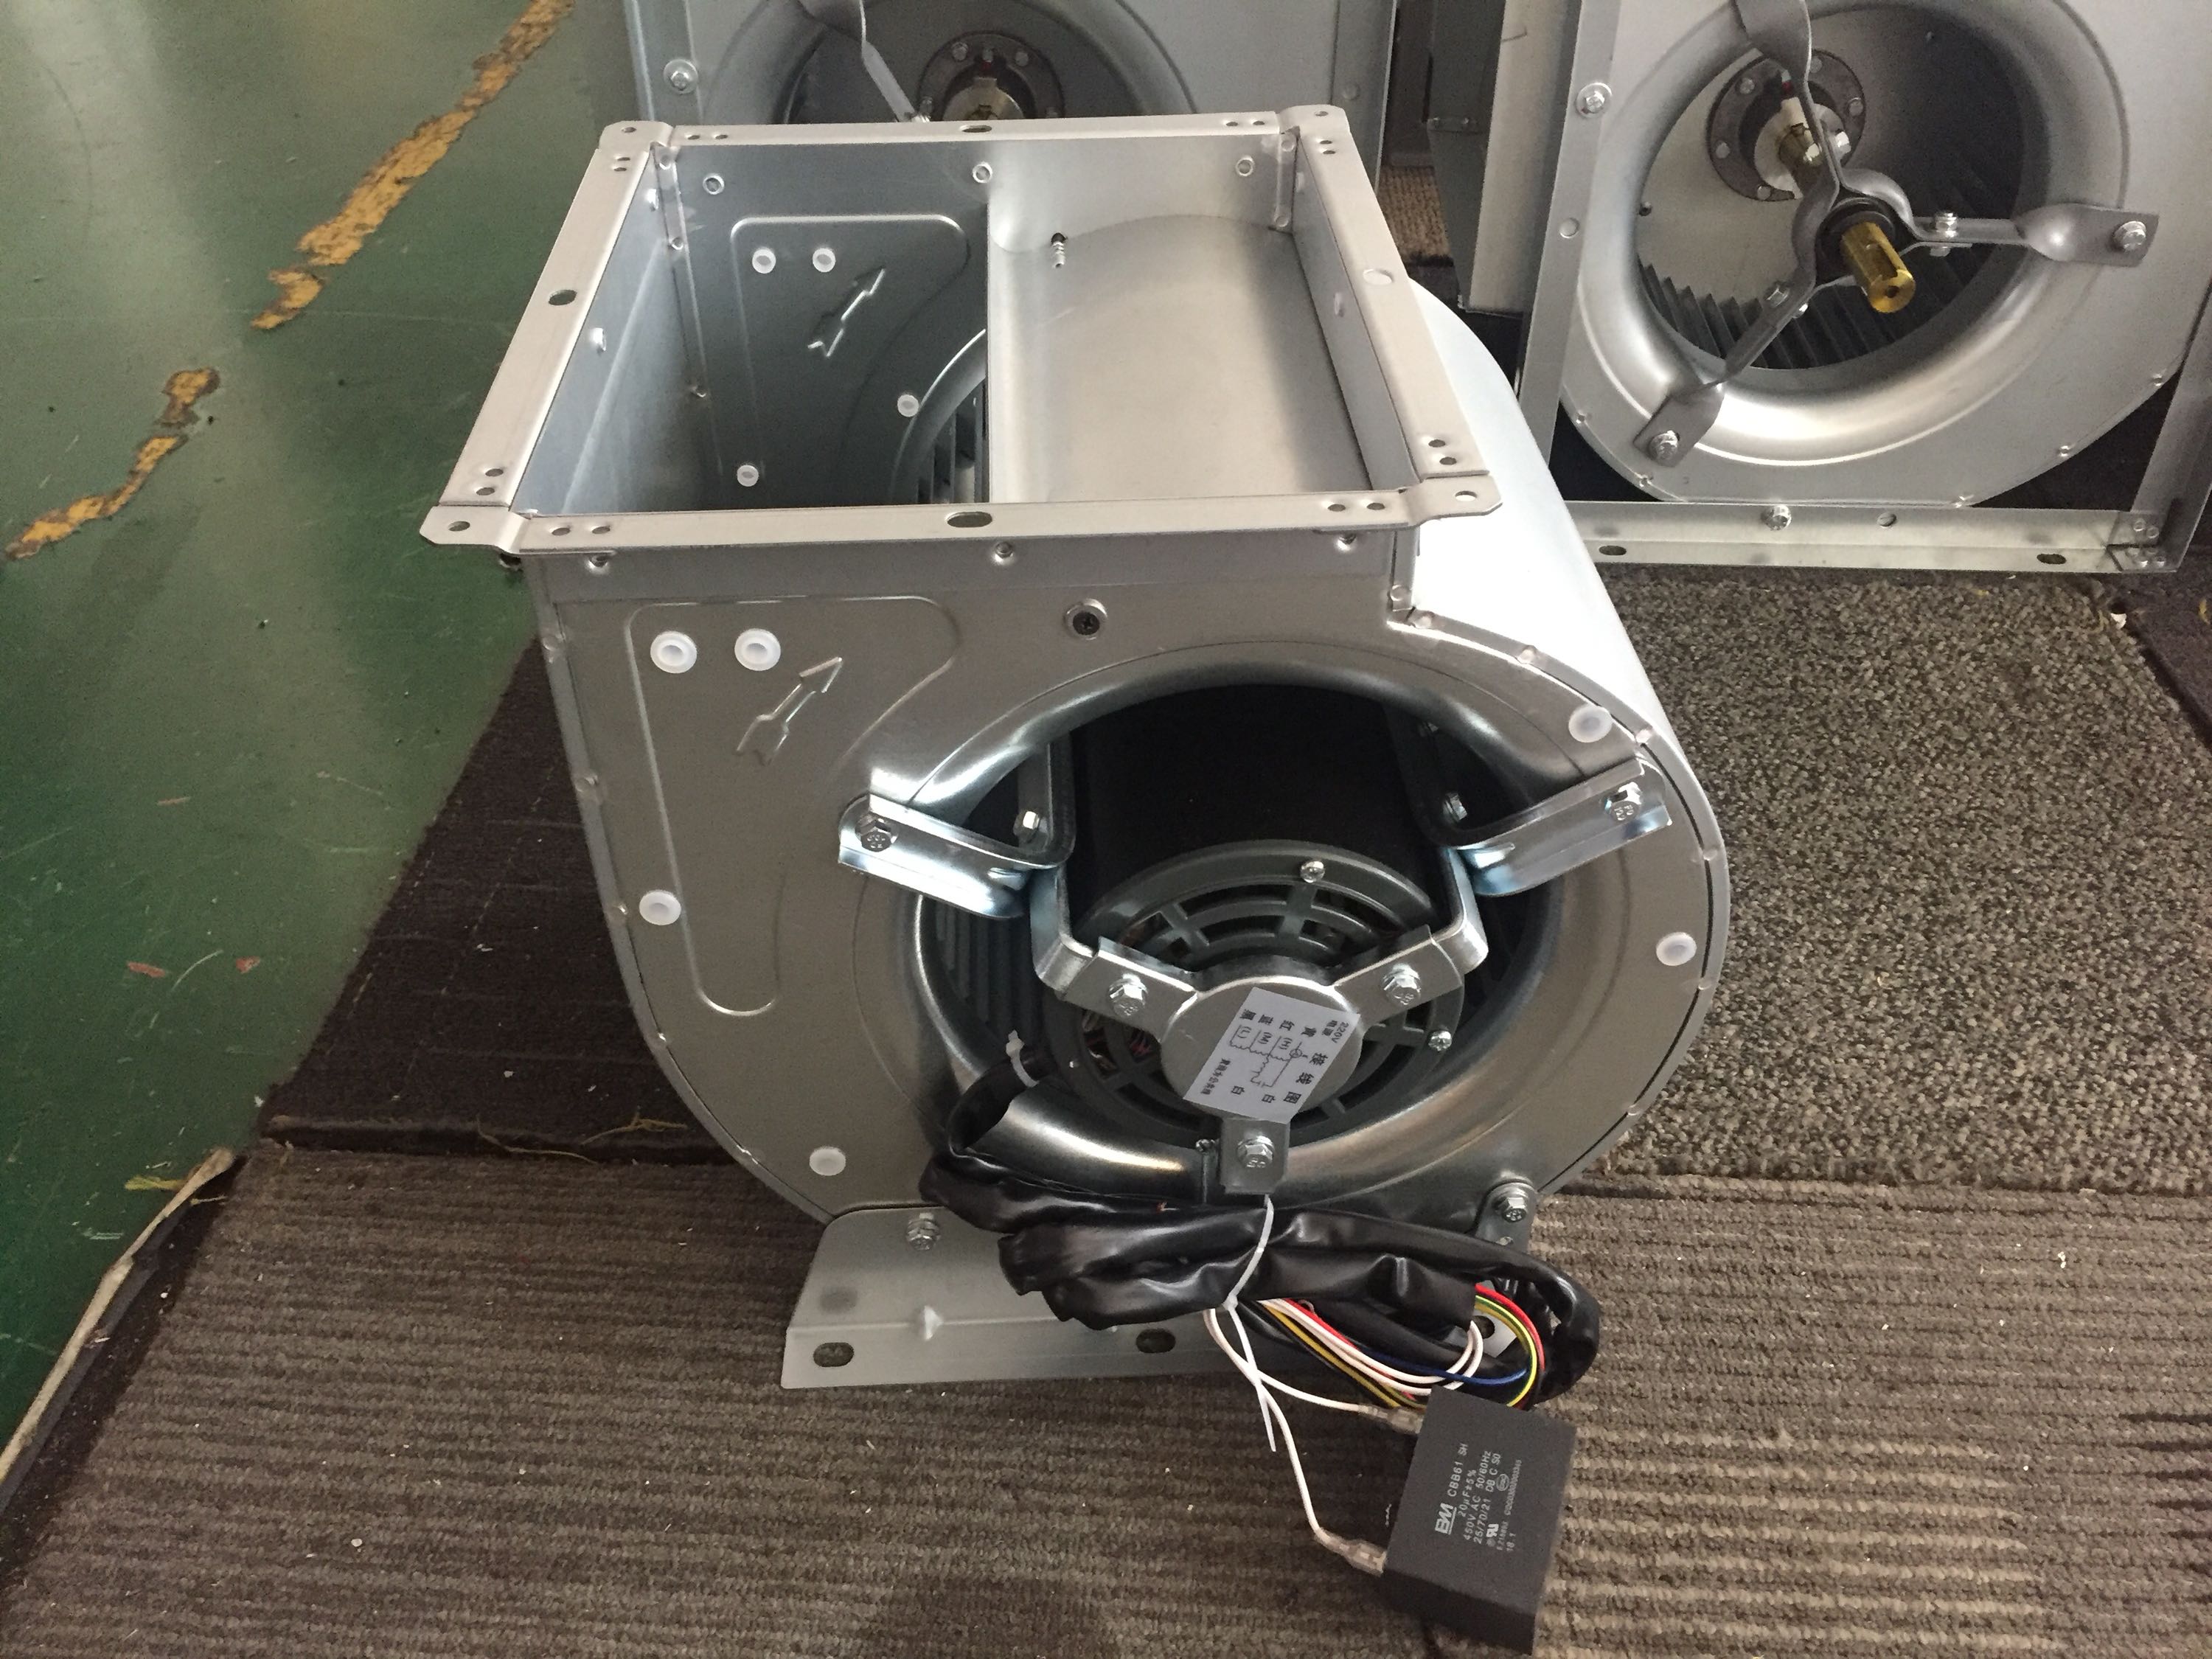 LKZ series single-phase motor direct drive Centrifugal Fan